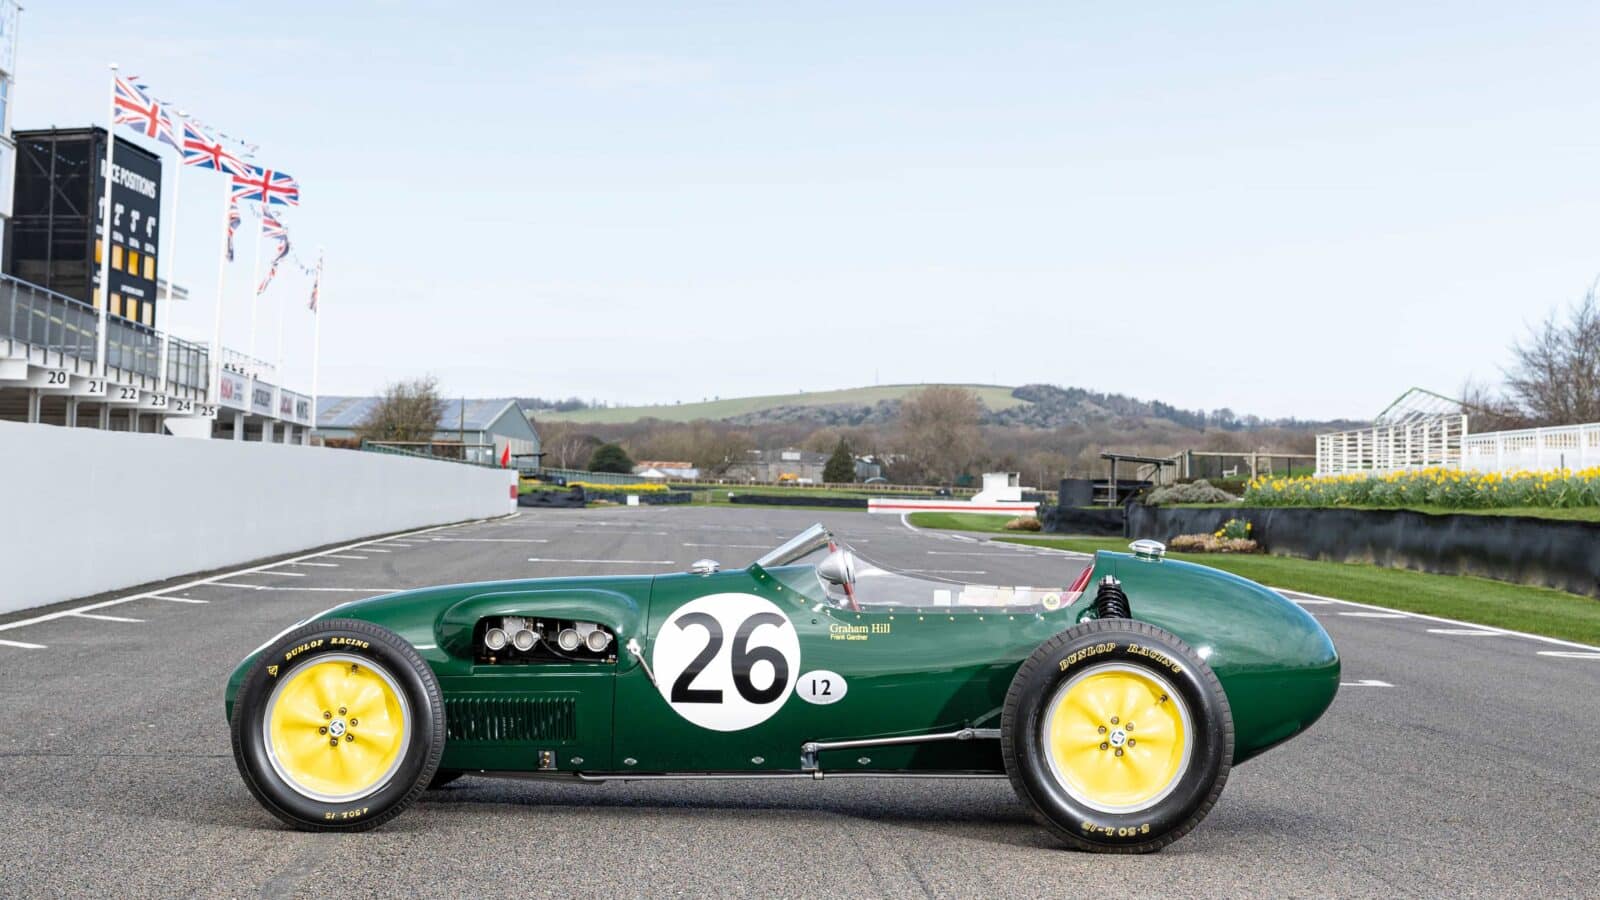 Lotus 12 on Hampshire roads